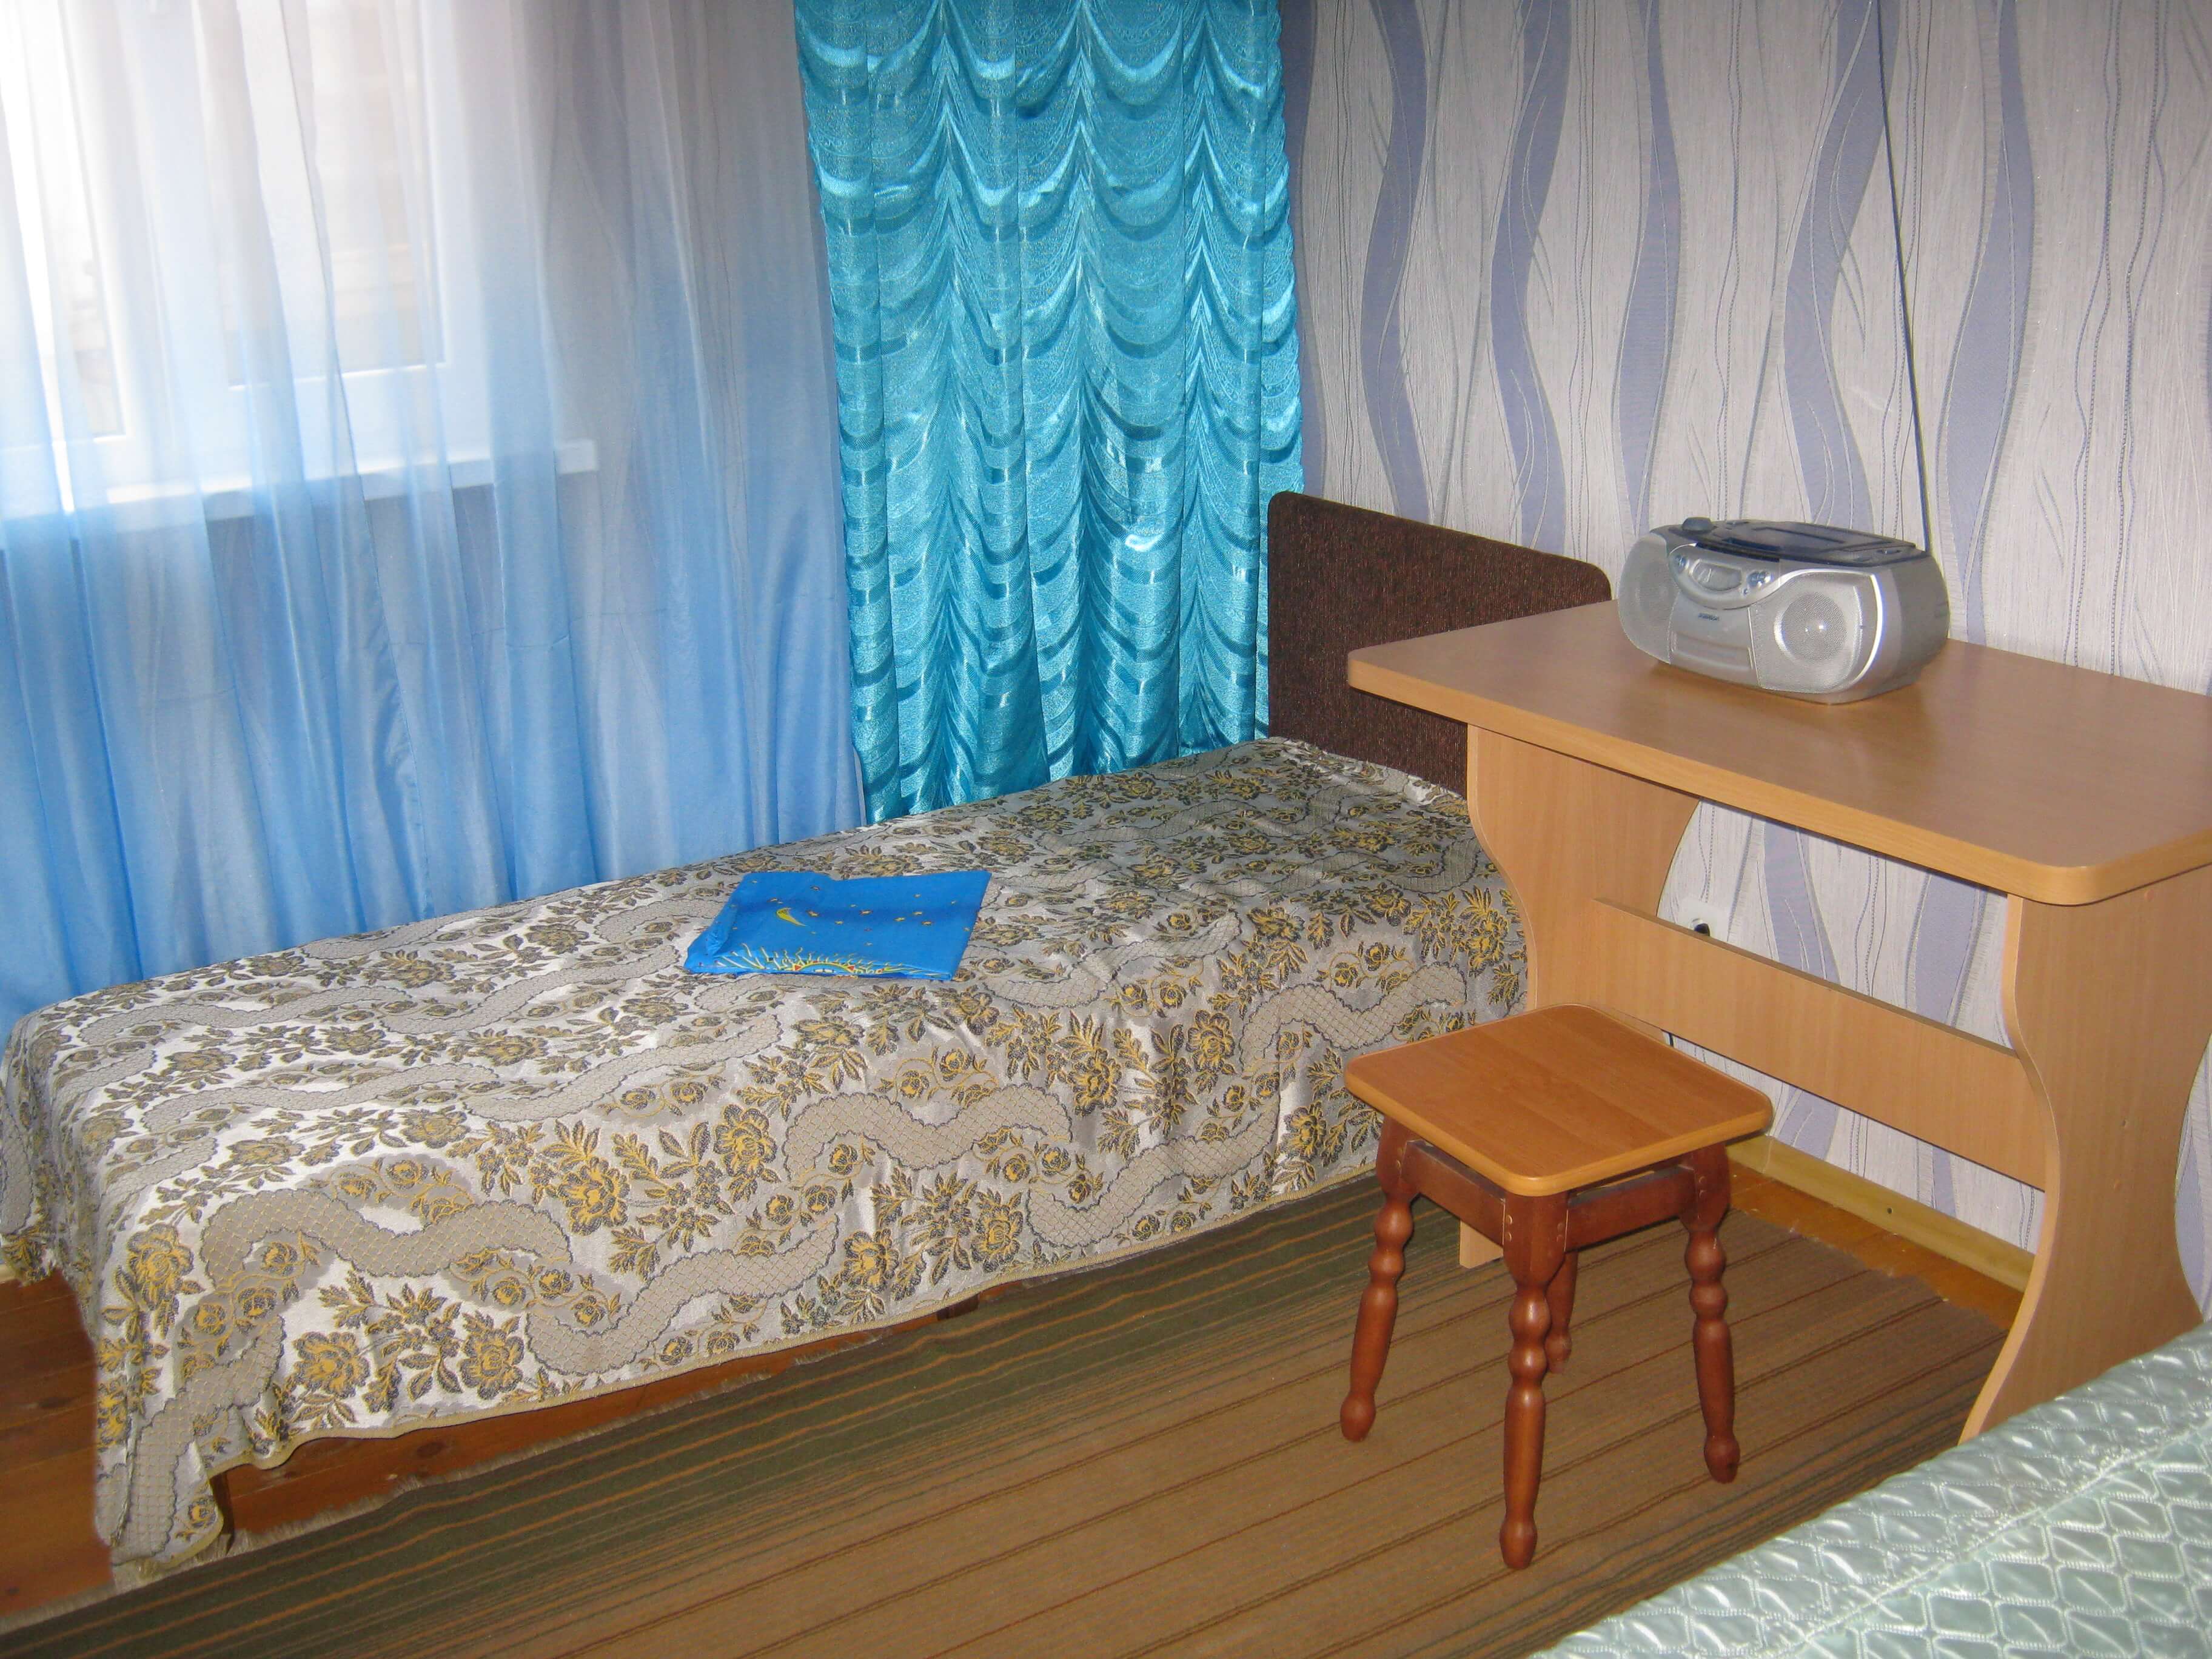 Однокомнатная квартира на ул. Зябрева,39 (28кв.м) до 3 гостей